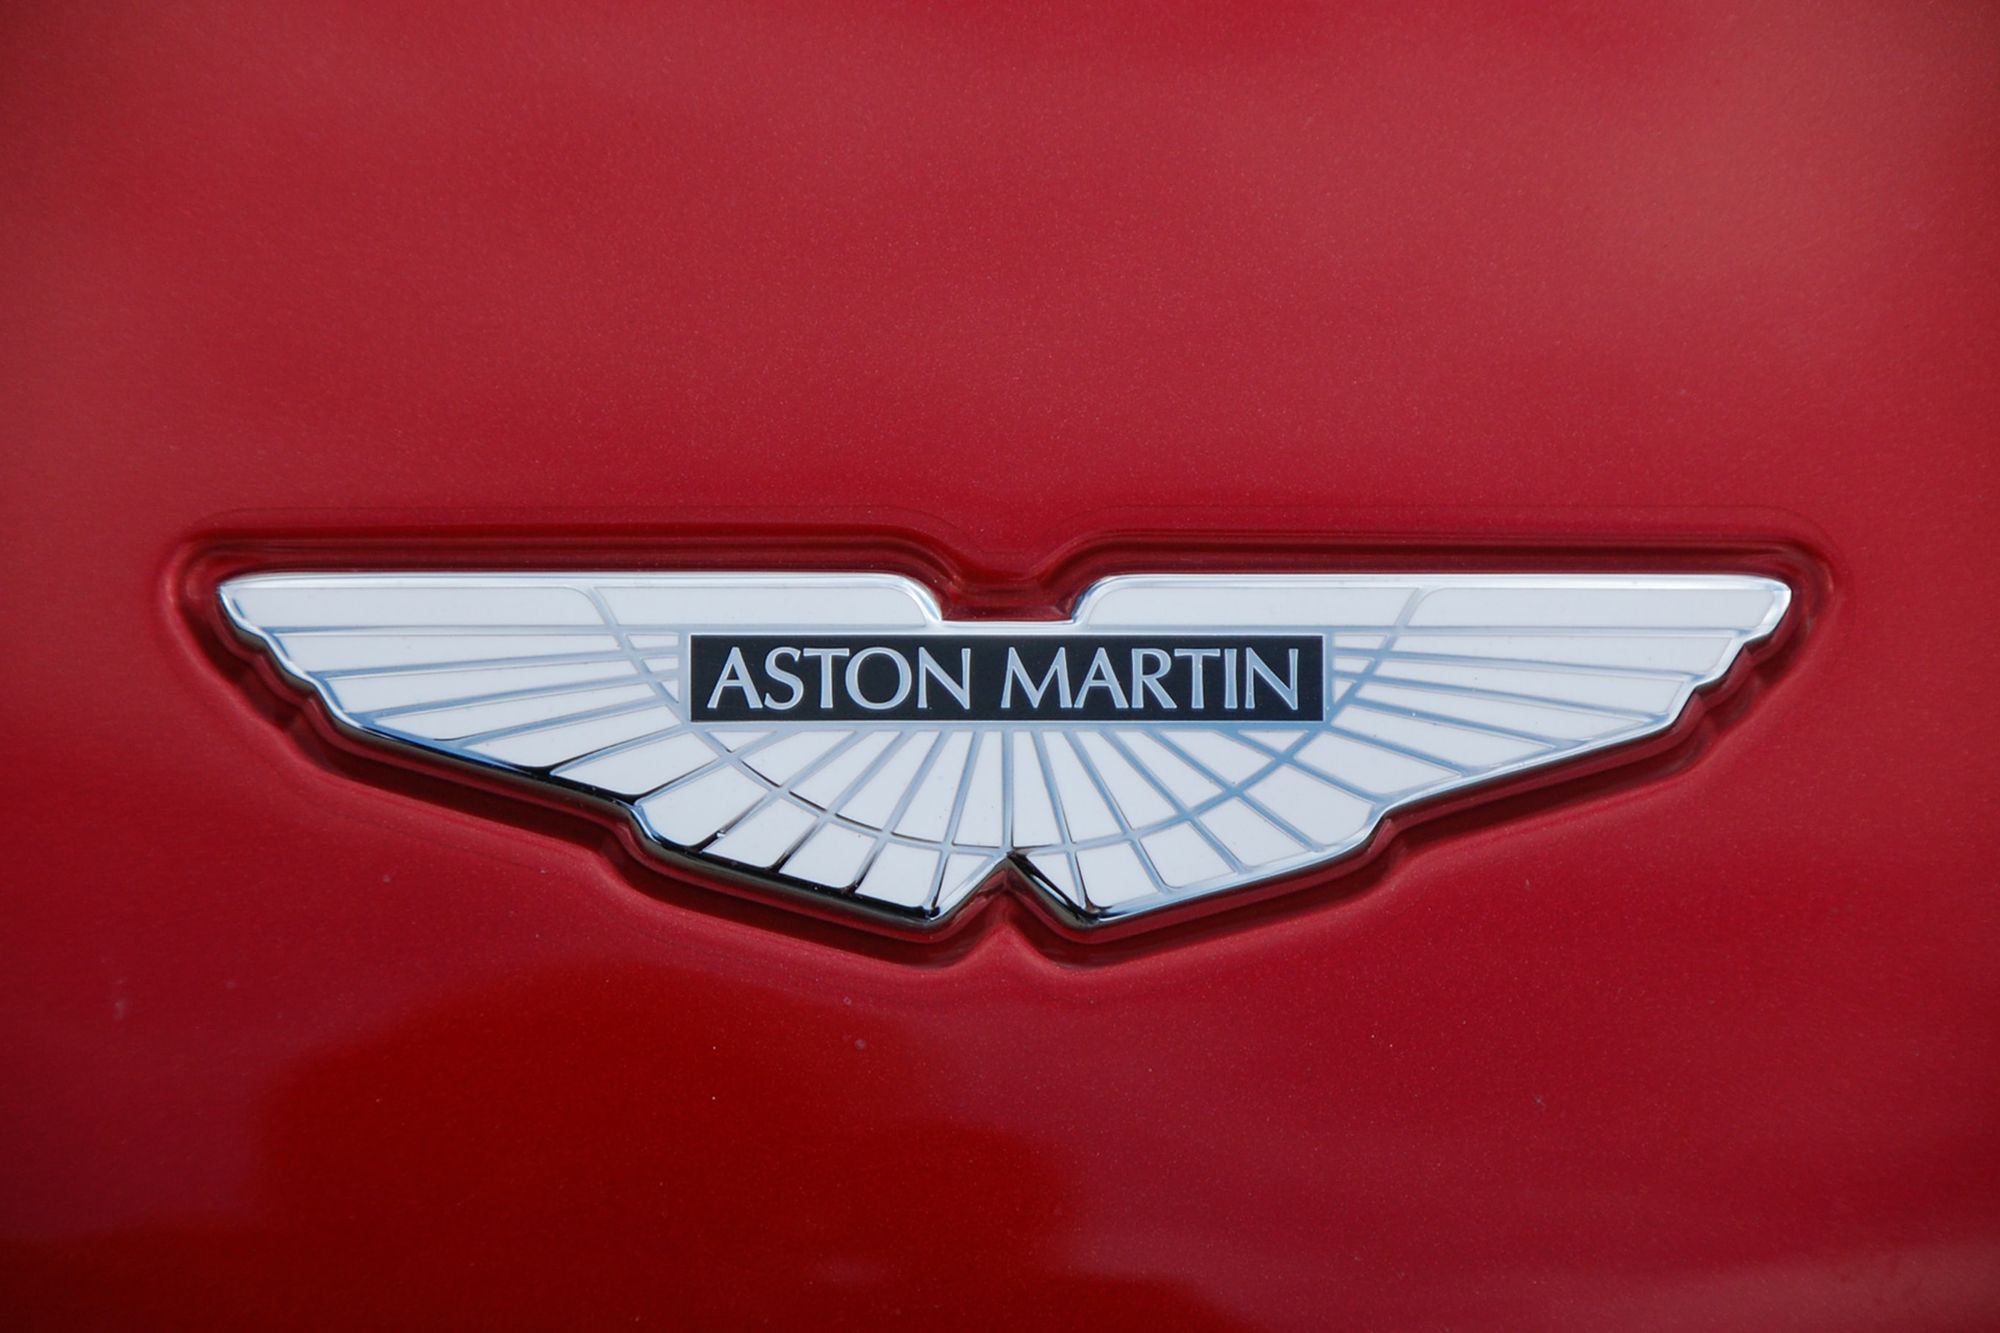 Aston Martin Valkyrie RHD. (Sold)